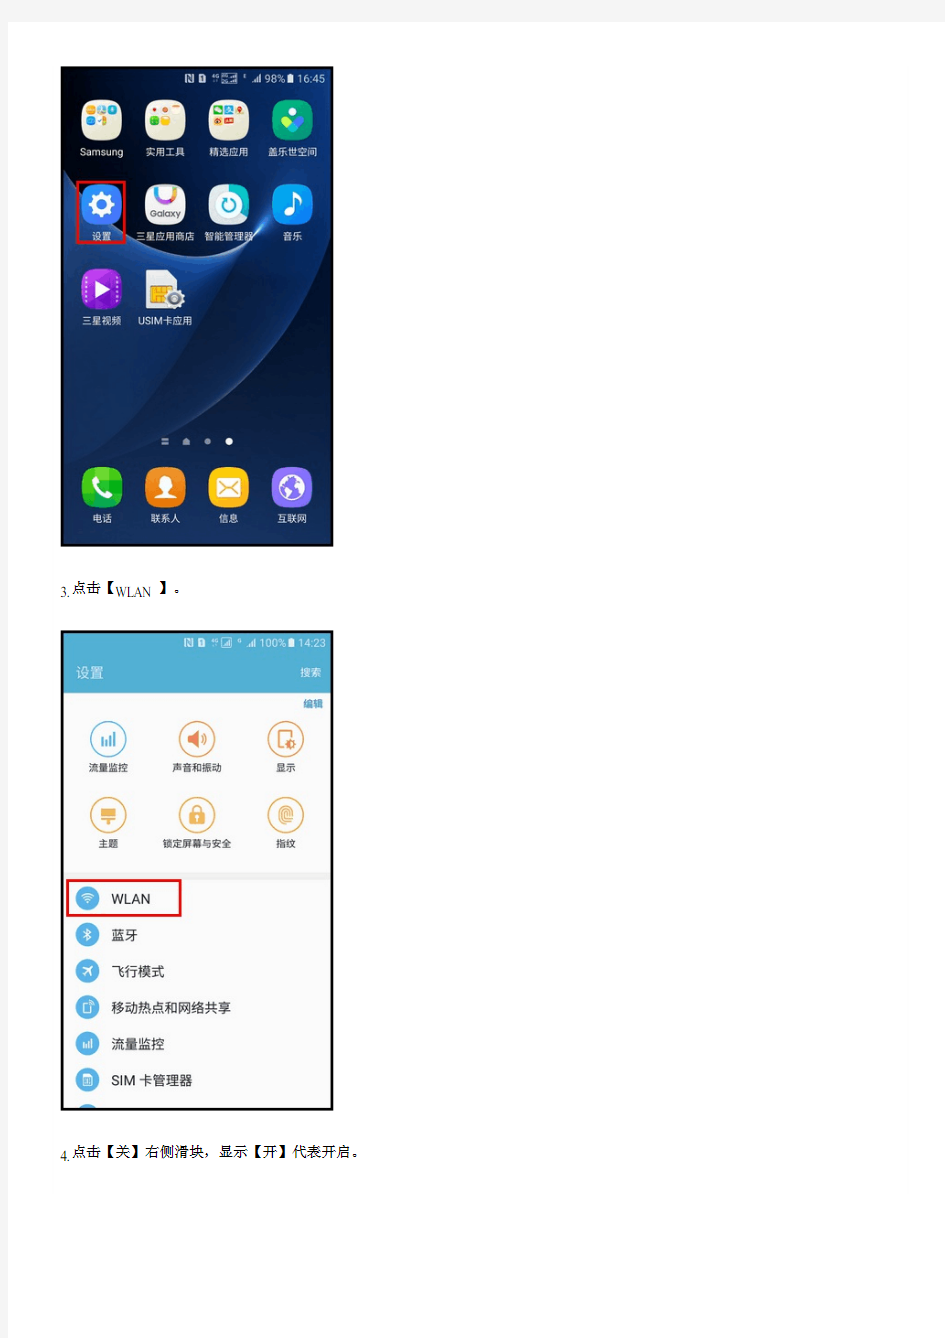 Samsung Galaxy S7 SM-G9300(6.0.1)如何通过WLAN直连连接其他设备